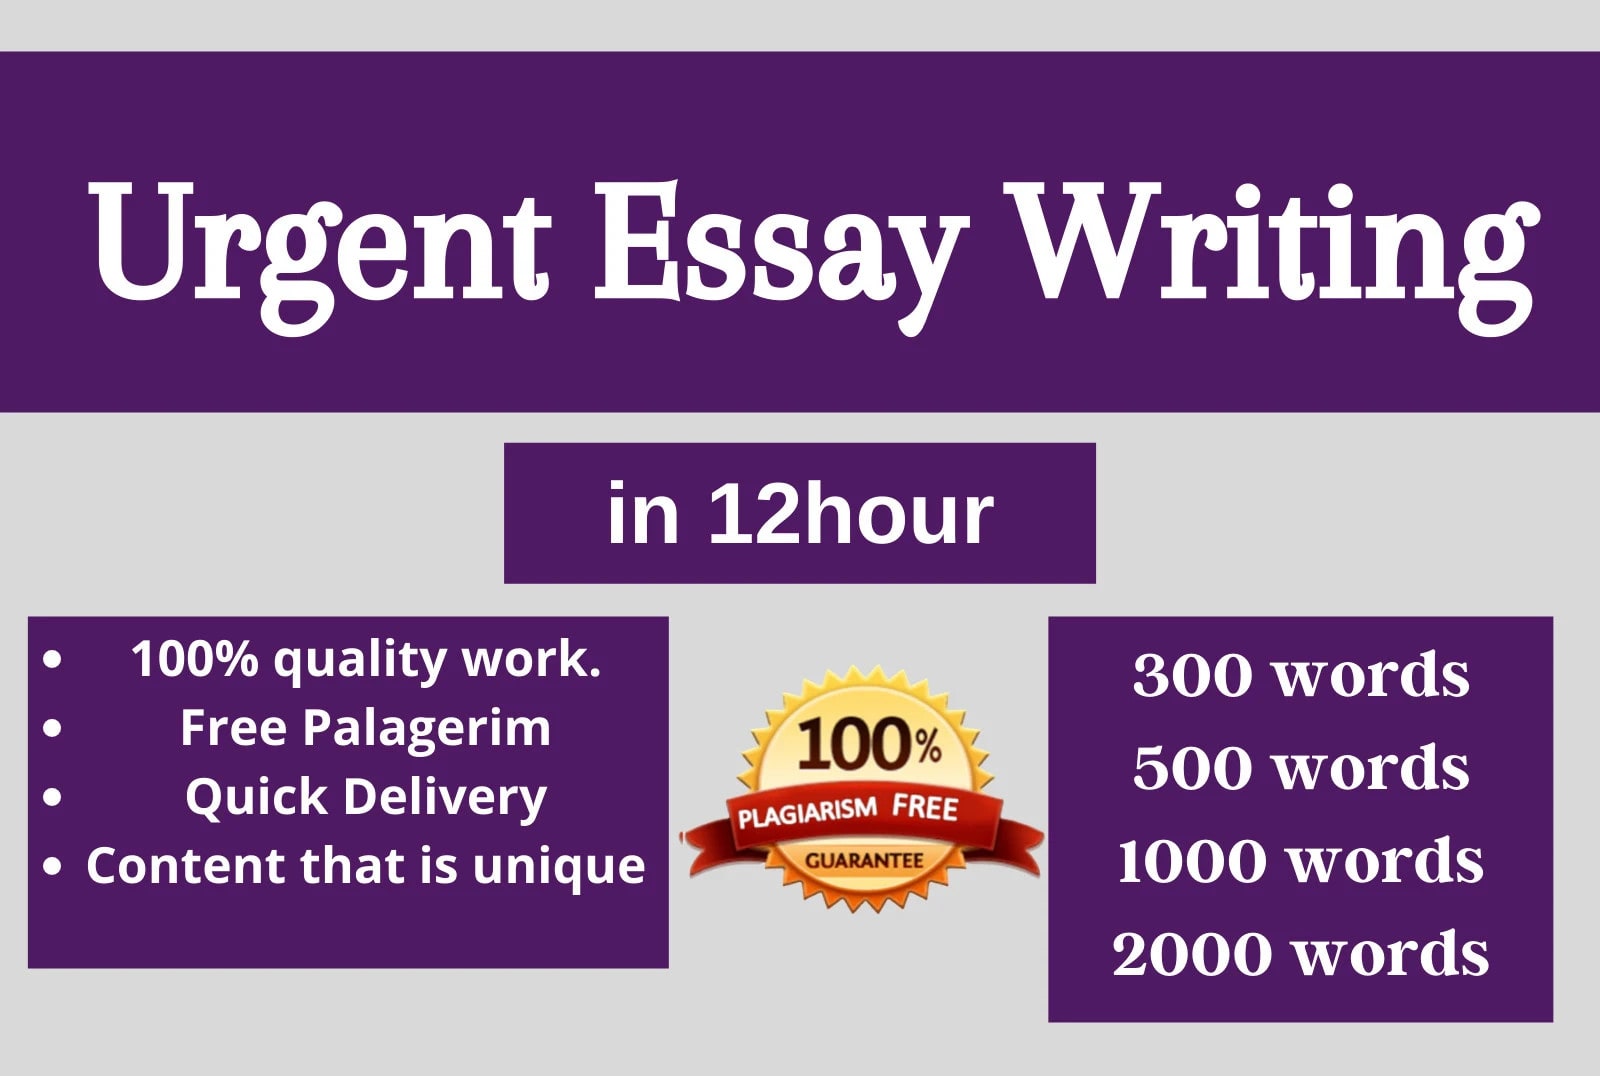 500 word descriptive essay